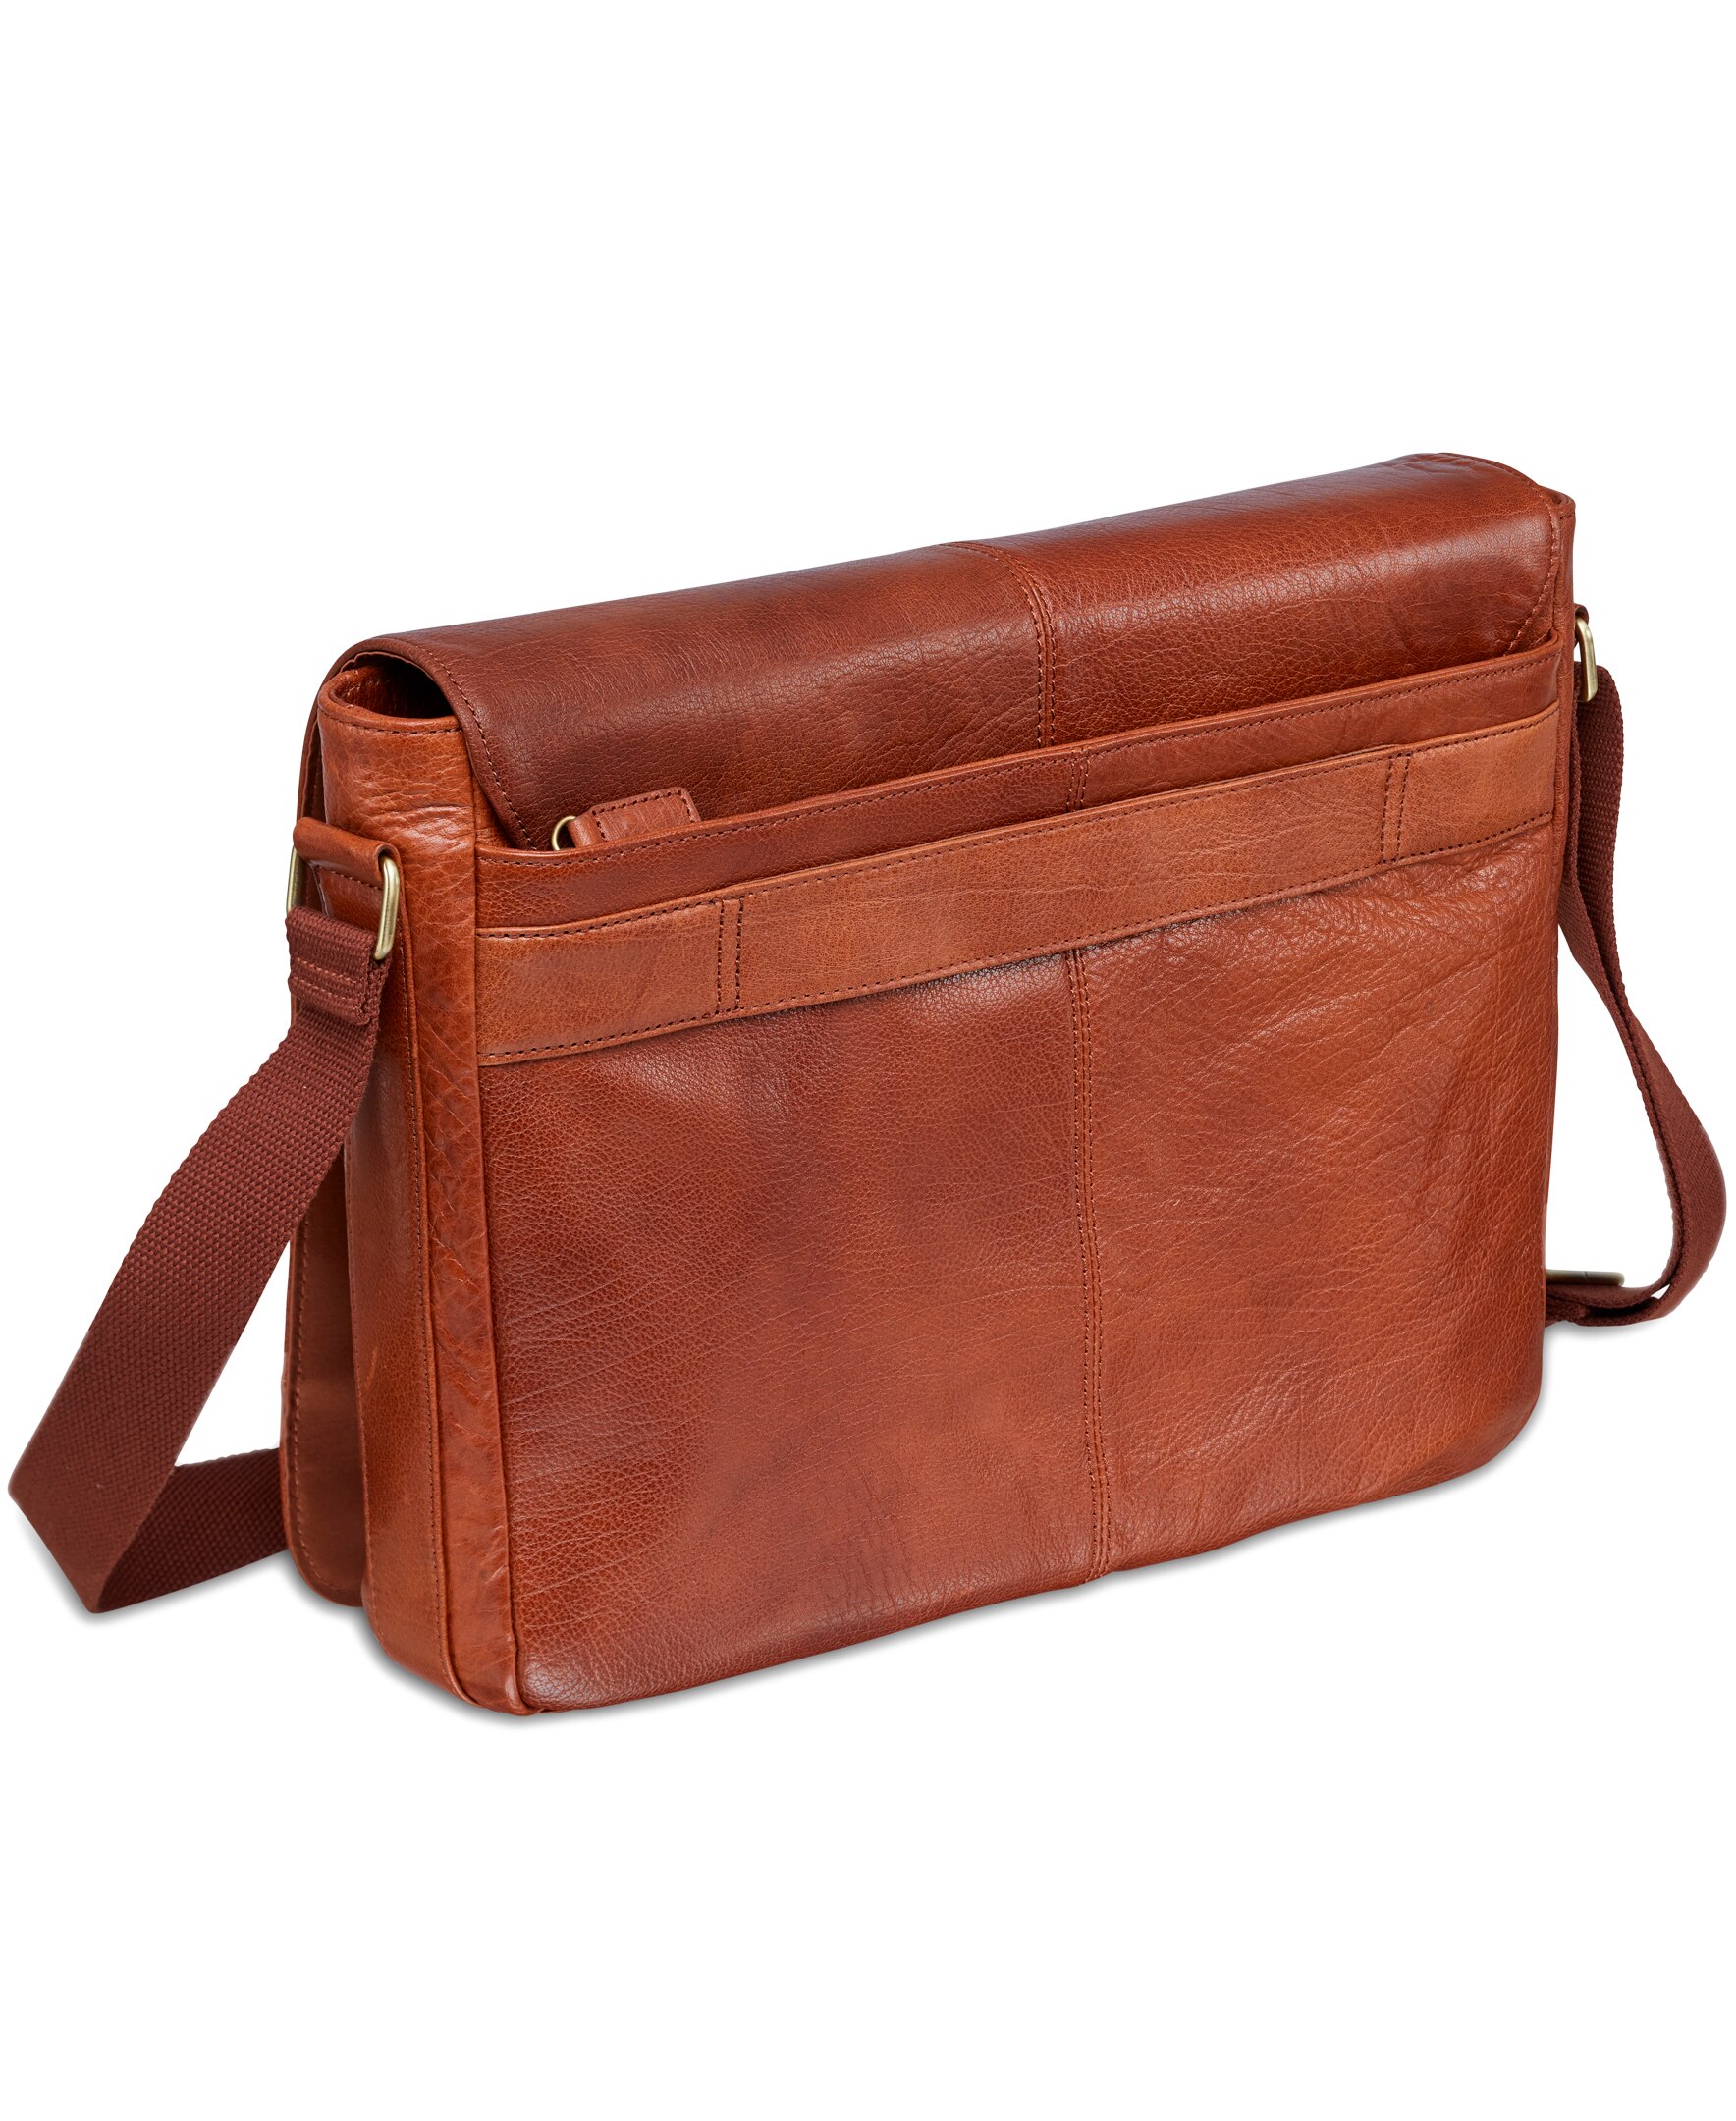 Clothing & Shoes - Handbags - Backpacks - Mancini Arizona 